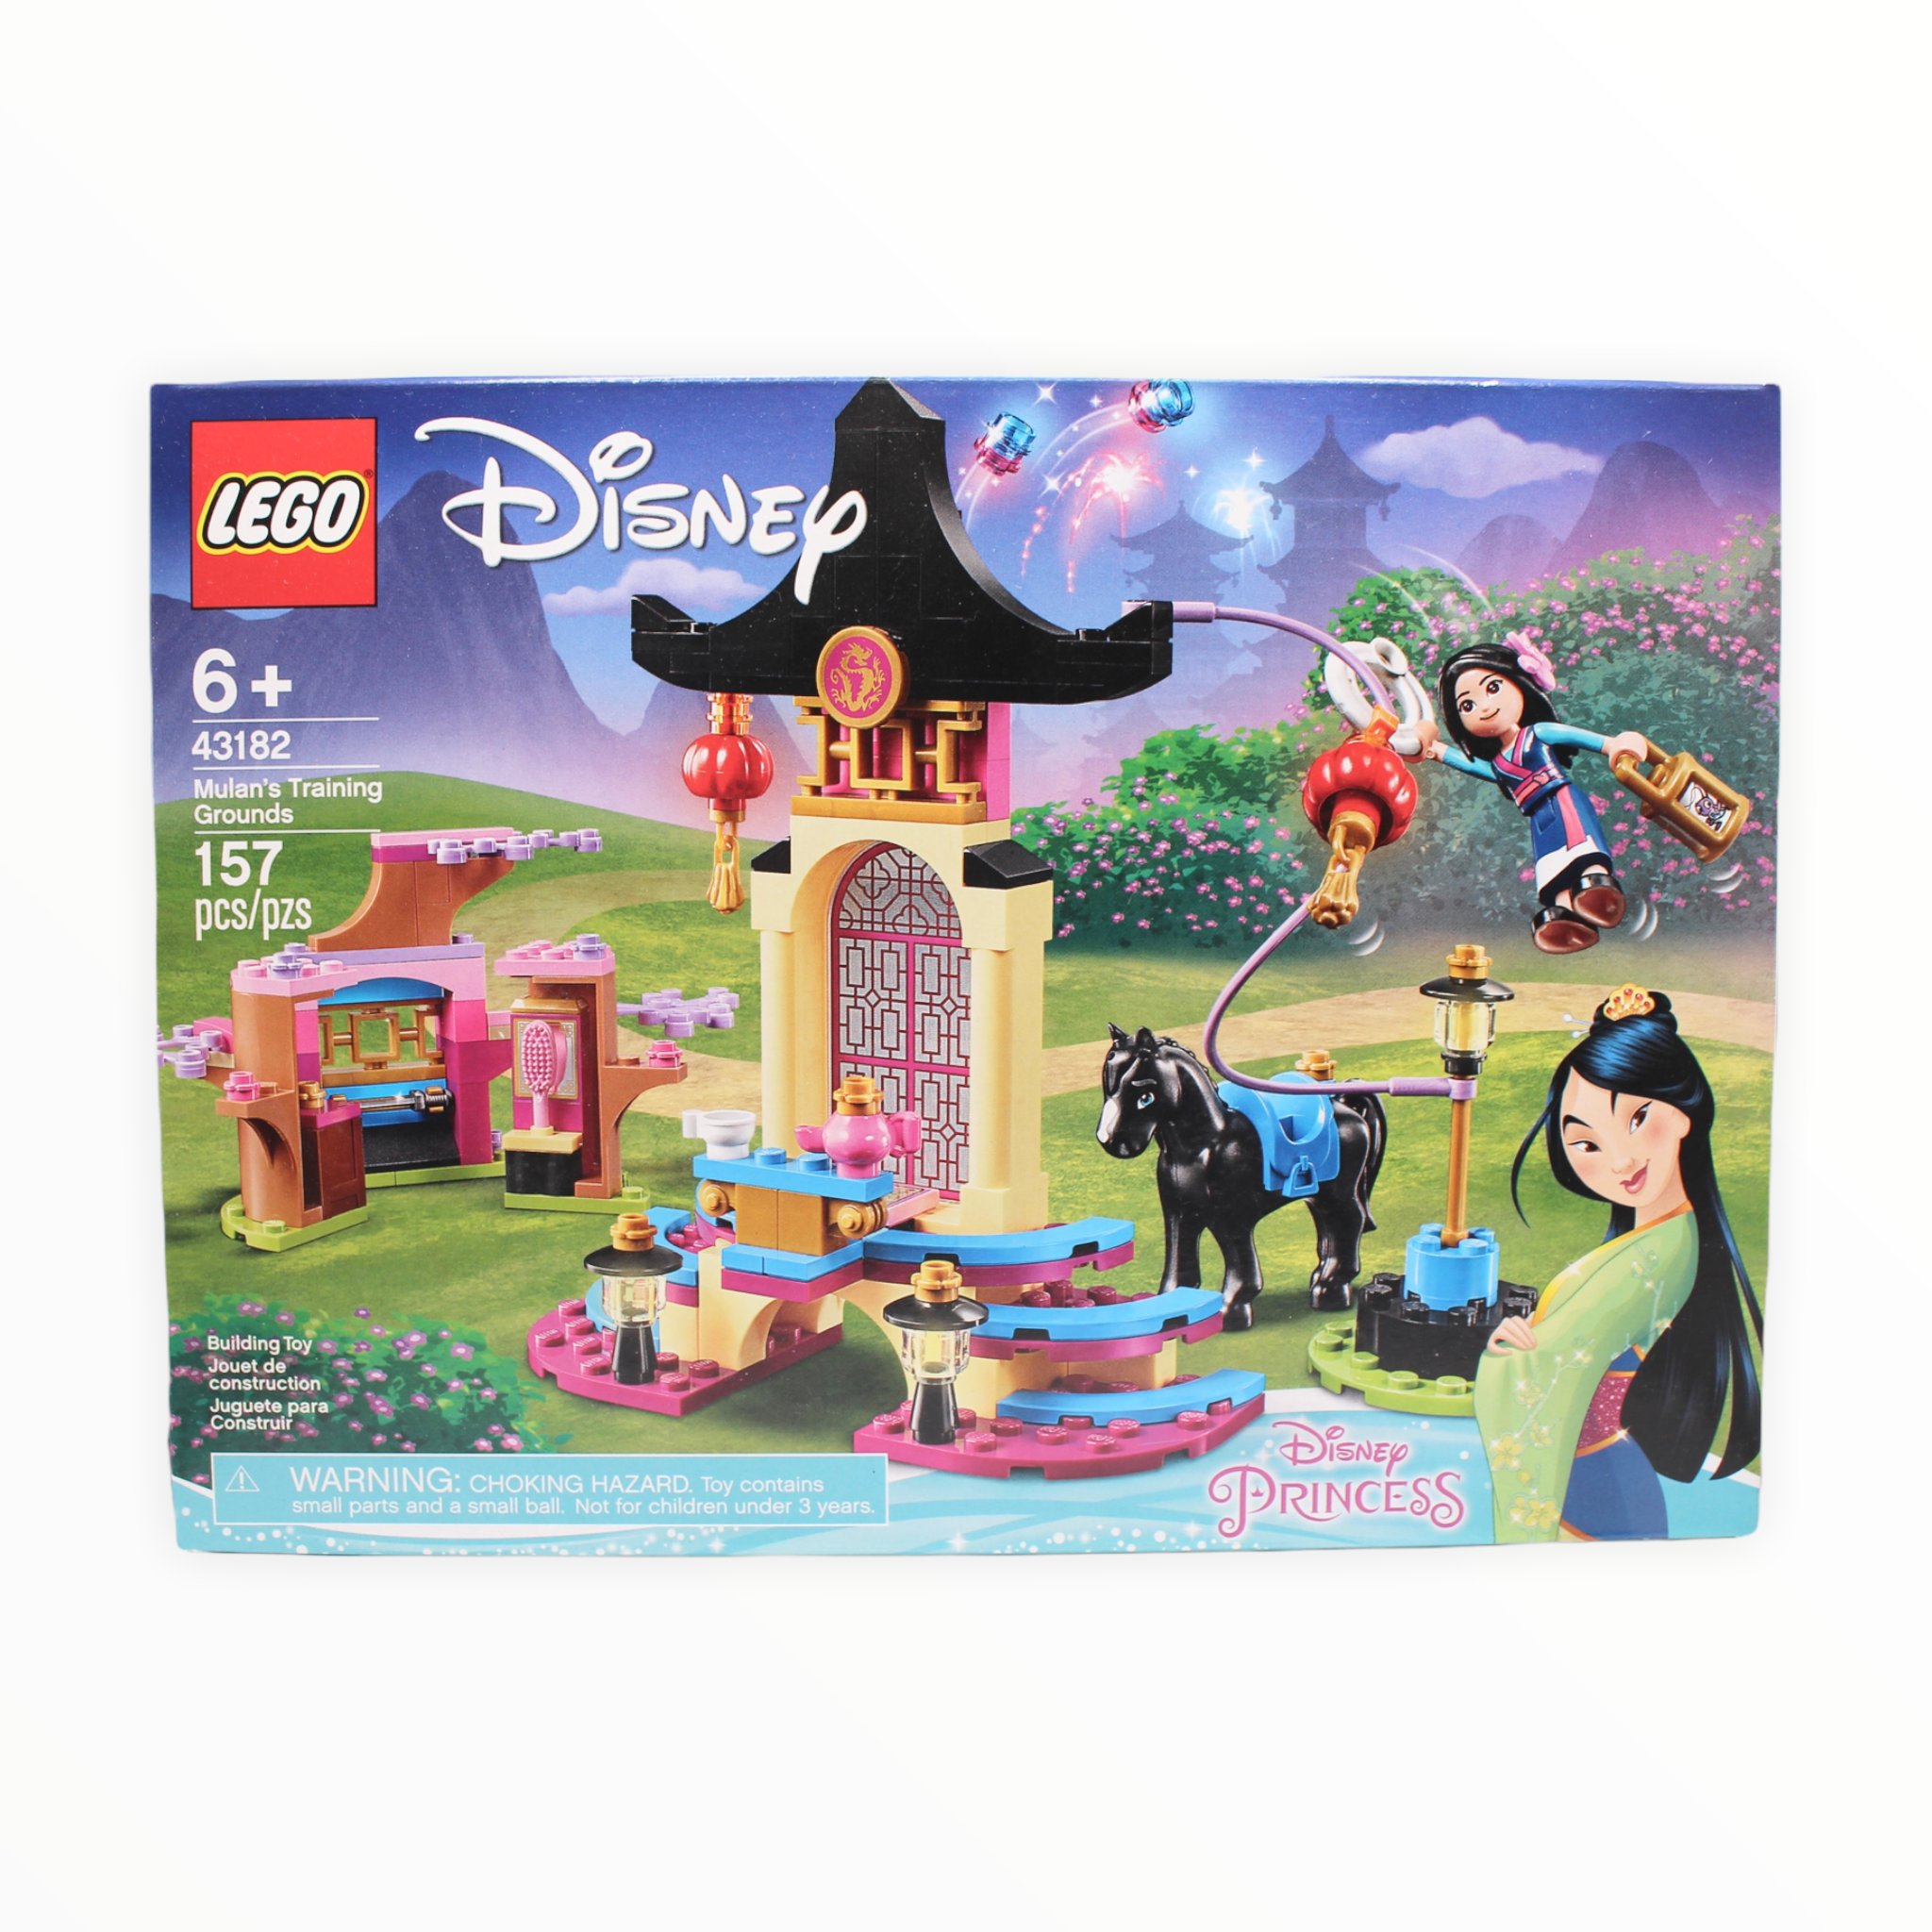 Retired Set 43182 Disney Princess Mulan’s Training Grounds